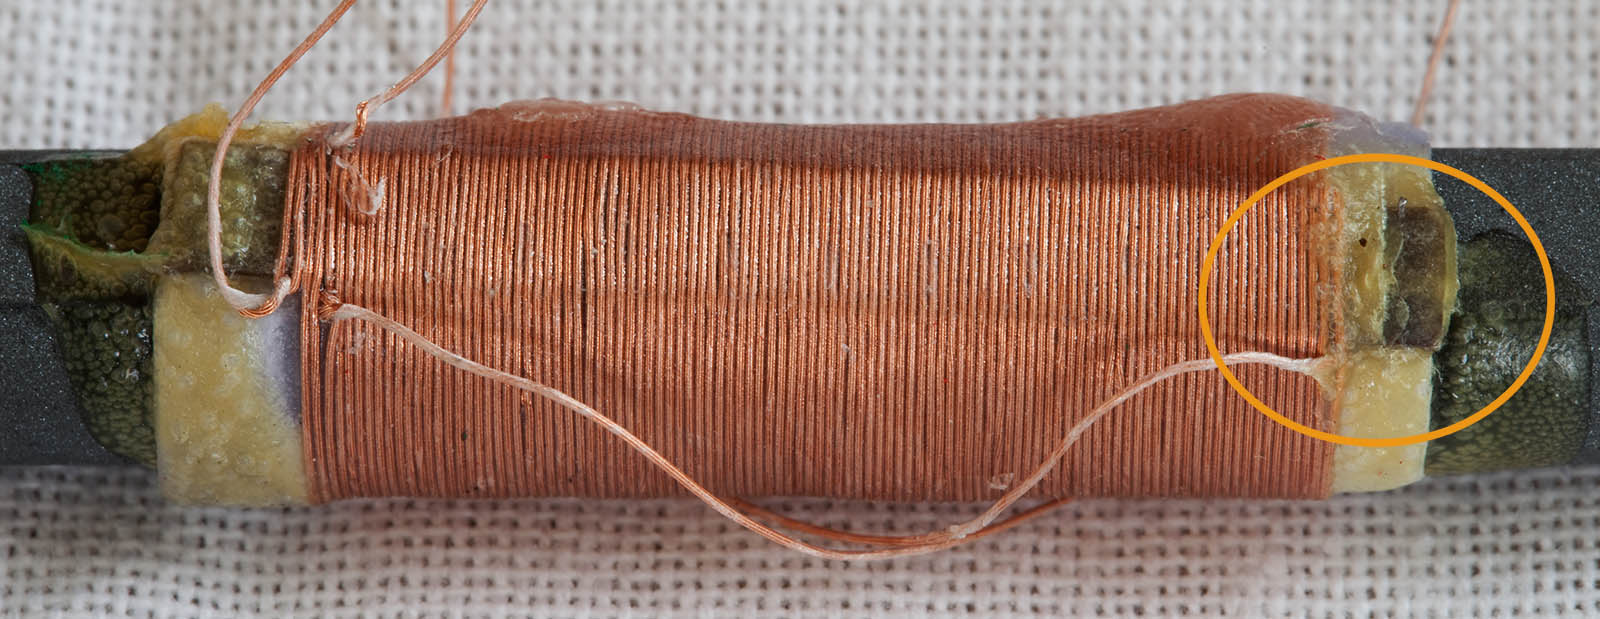 Closeup of main coil